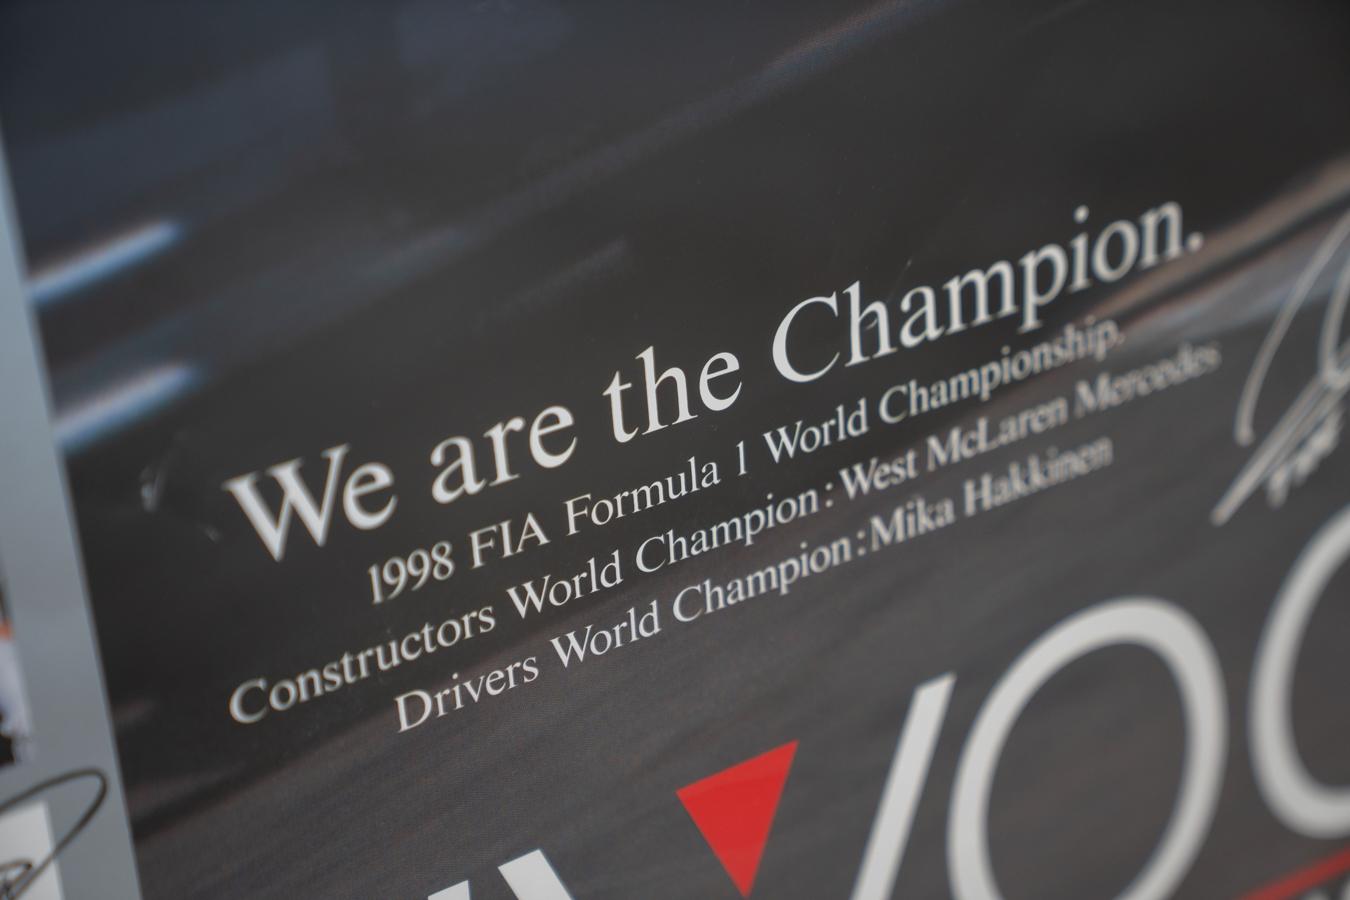 Iron Poster West McLaren Mercedes, FIA FORMULA 1, 1998 For Sale